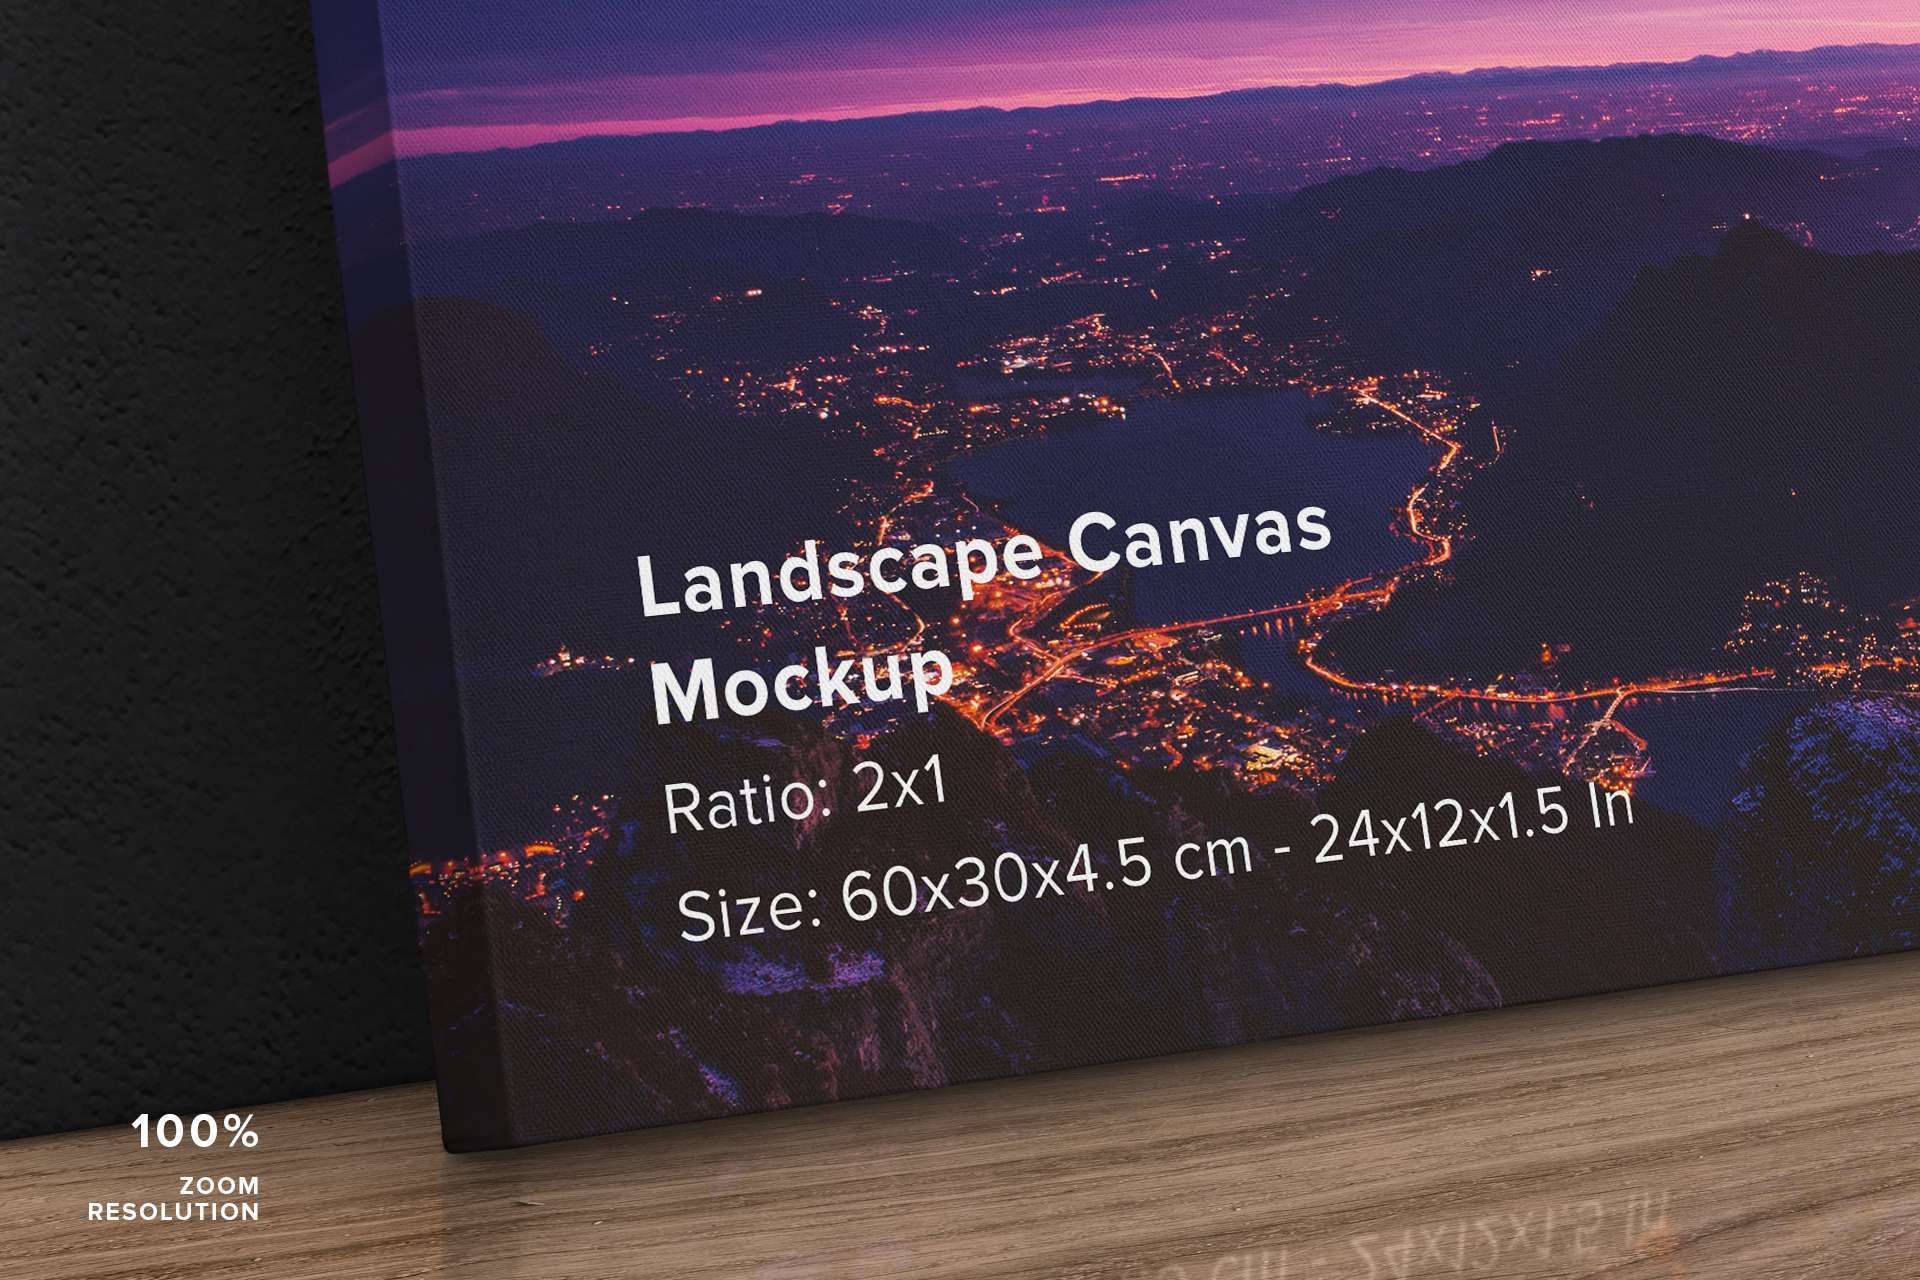 Leaning Landscape Canvas Ratio 2x1 Mockup - Left 1.5 In Wrap - carlosviloria.com